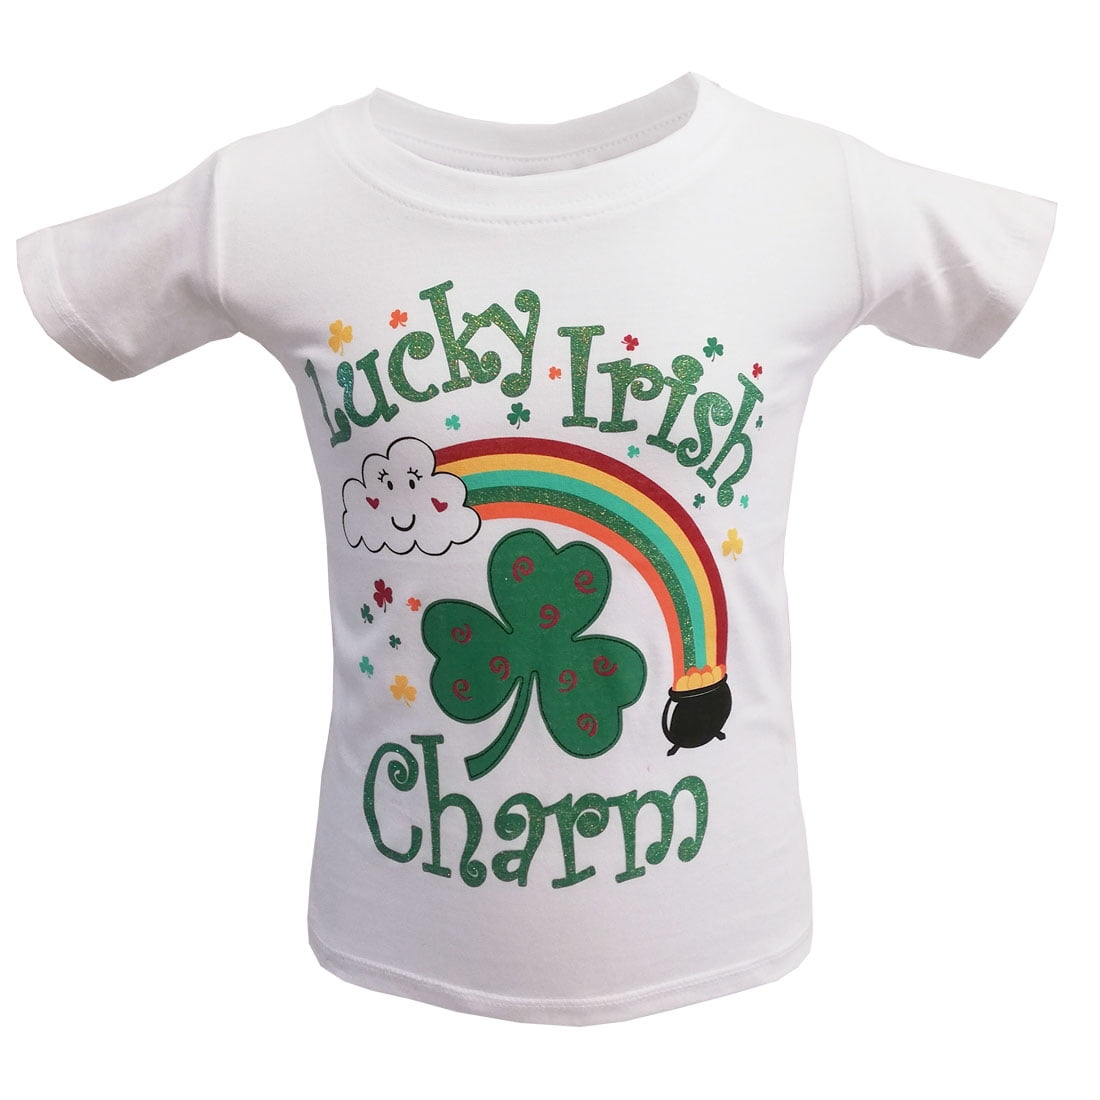 Patricks Day Kids Top Mammys Lucky Charm Childrens T-Shirt St 1-2 Years Patricks Day Kids Top Toddler Irish St 